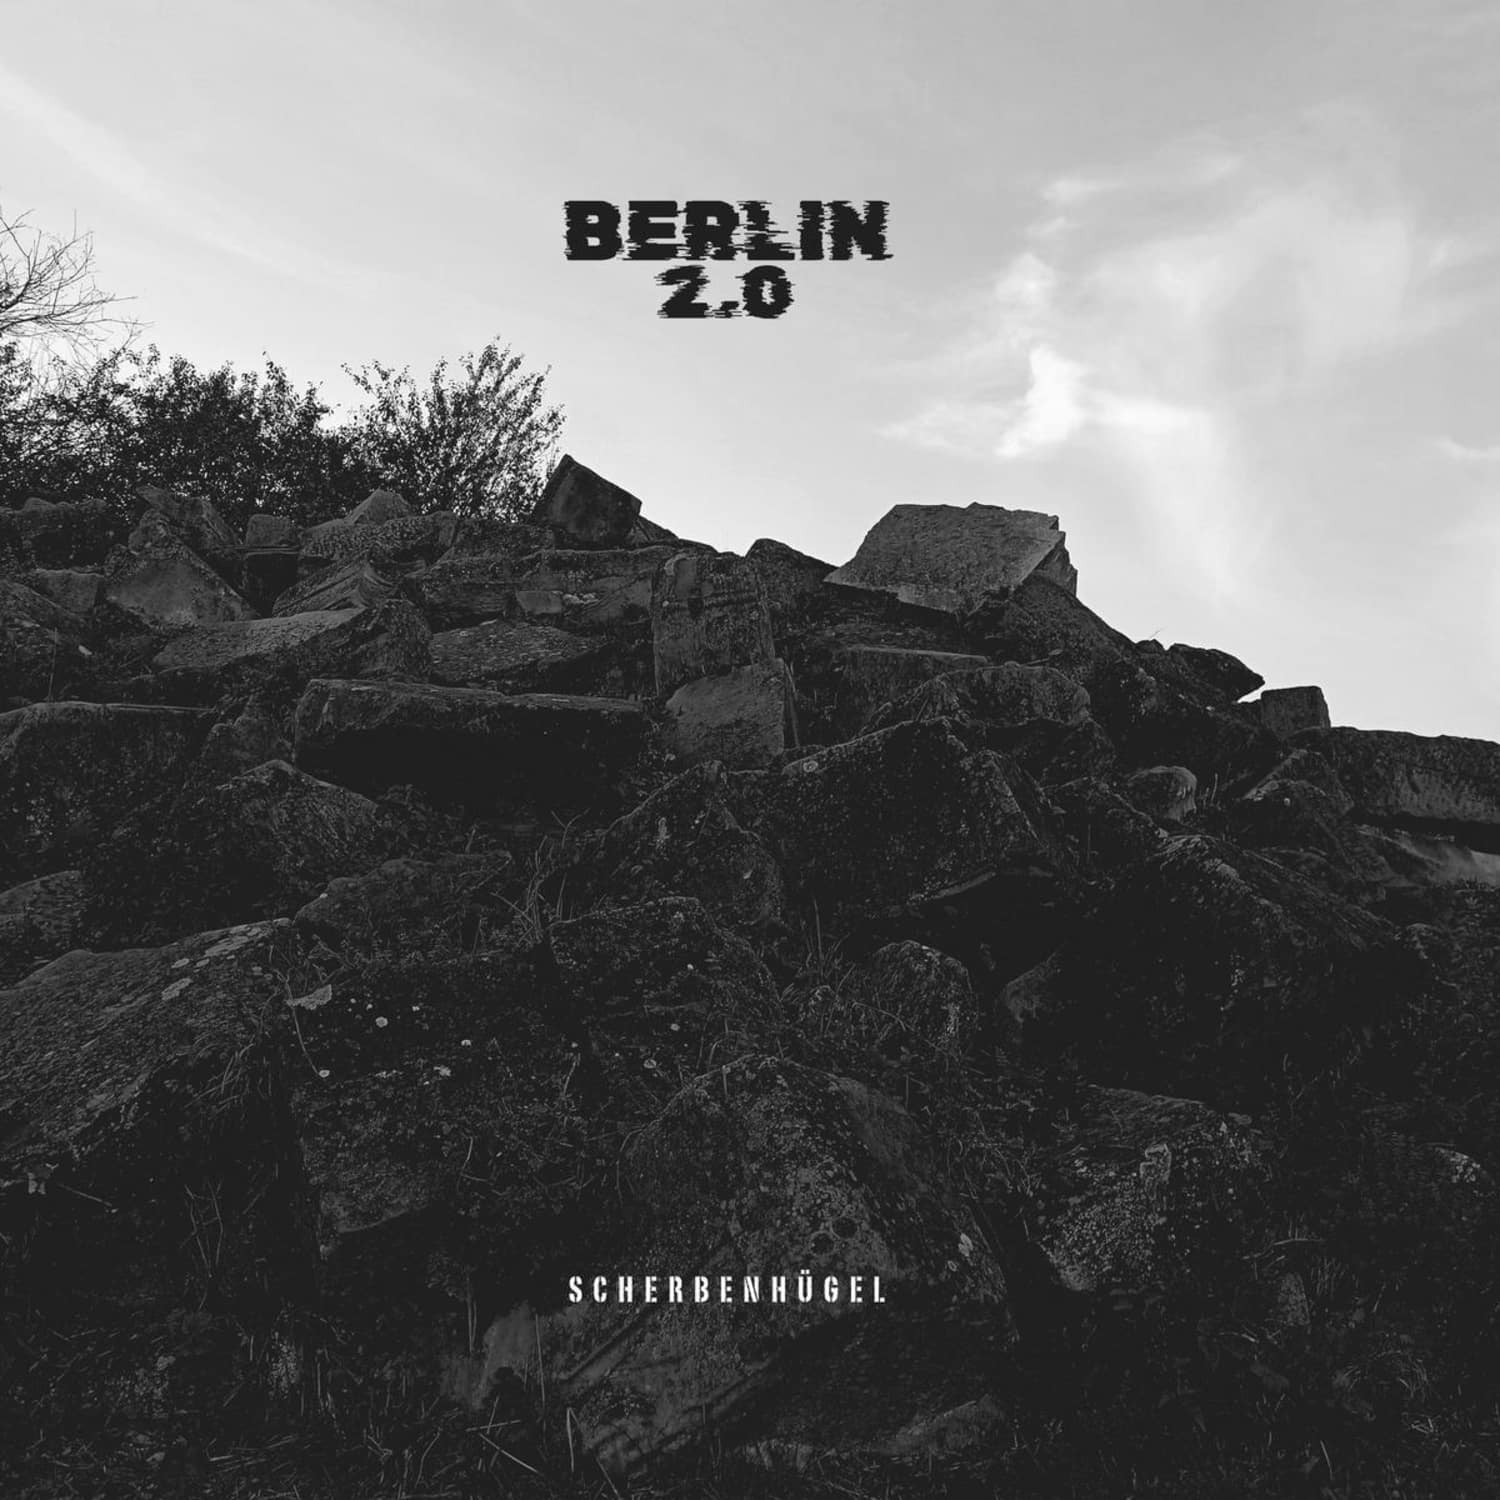 Berlin 2.0 - SCHERBENHGEL 